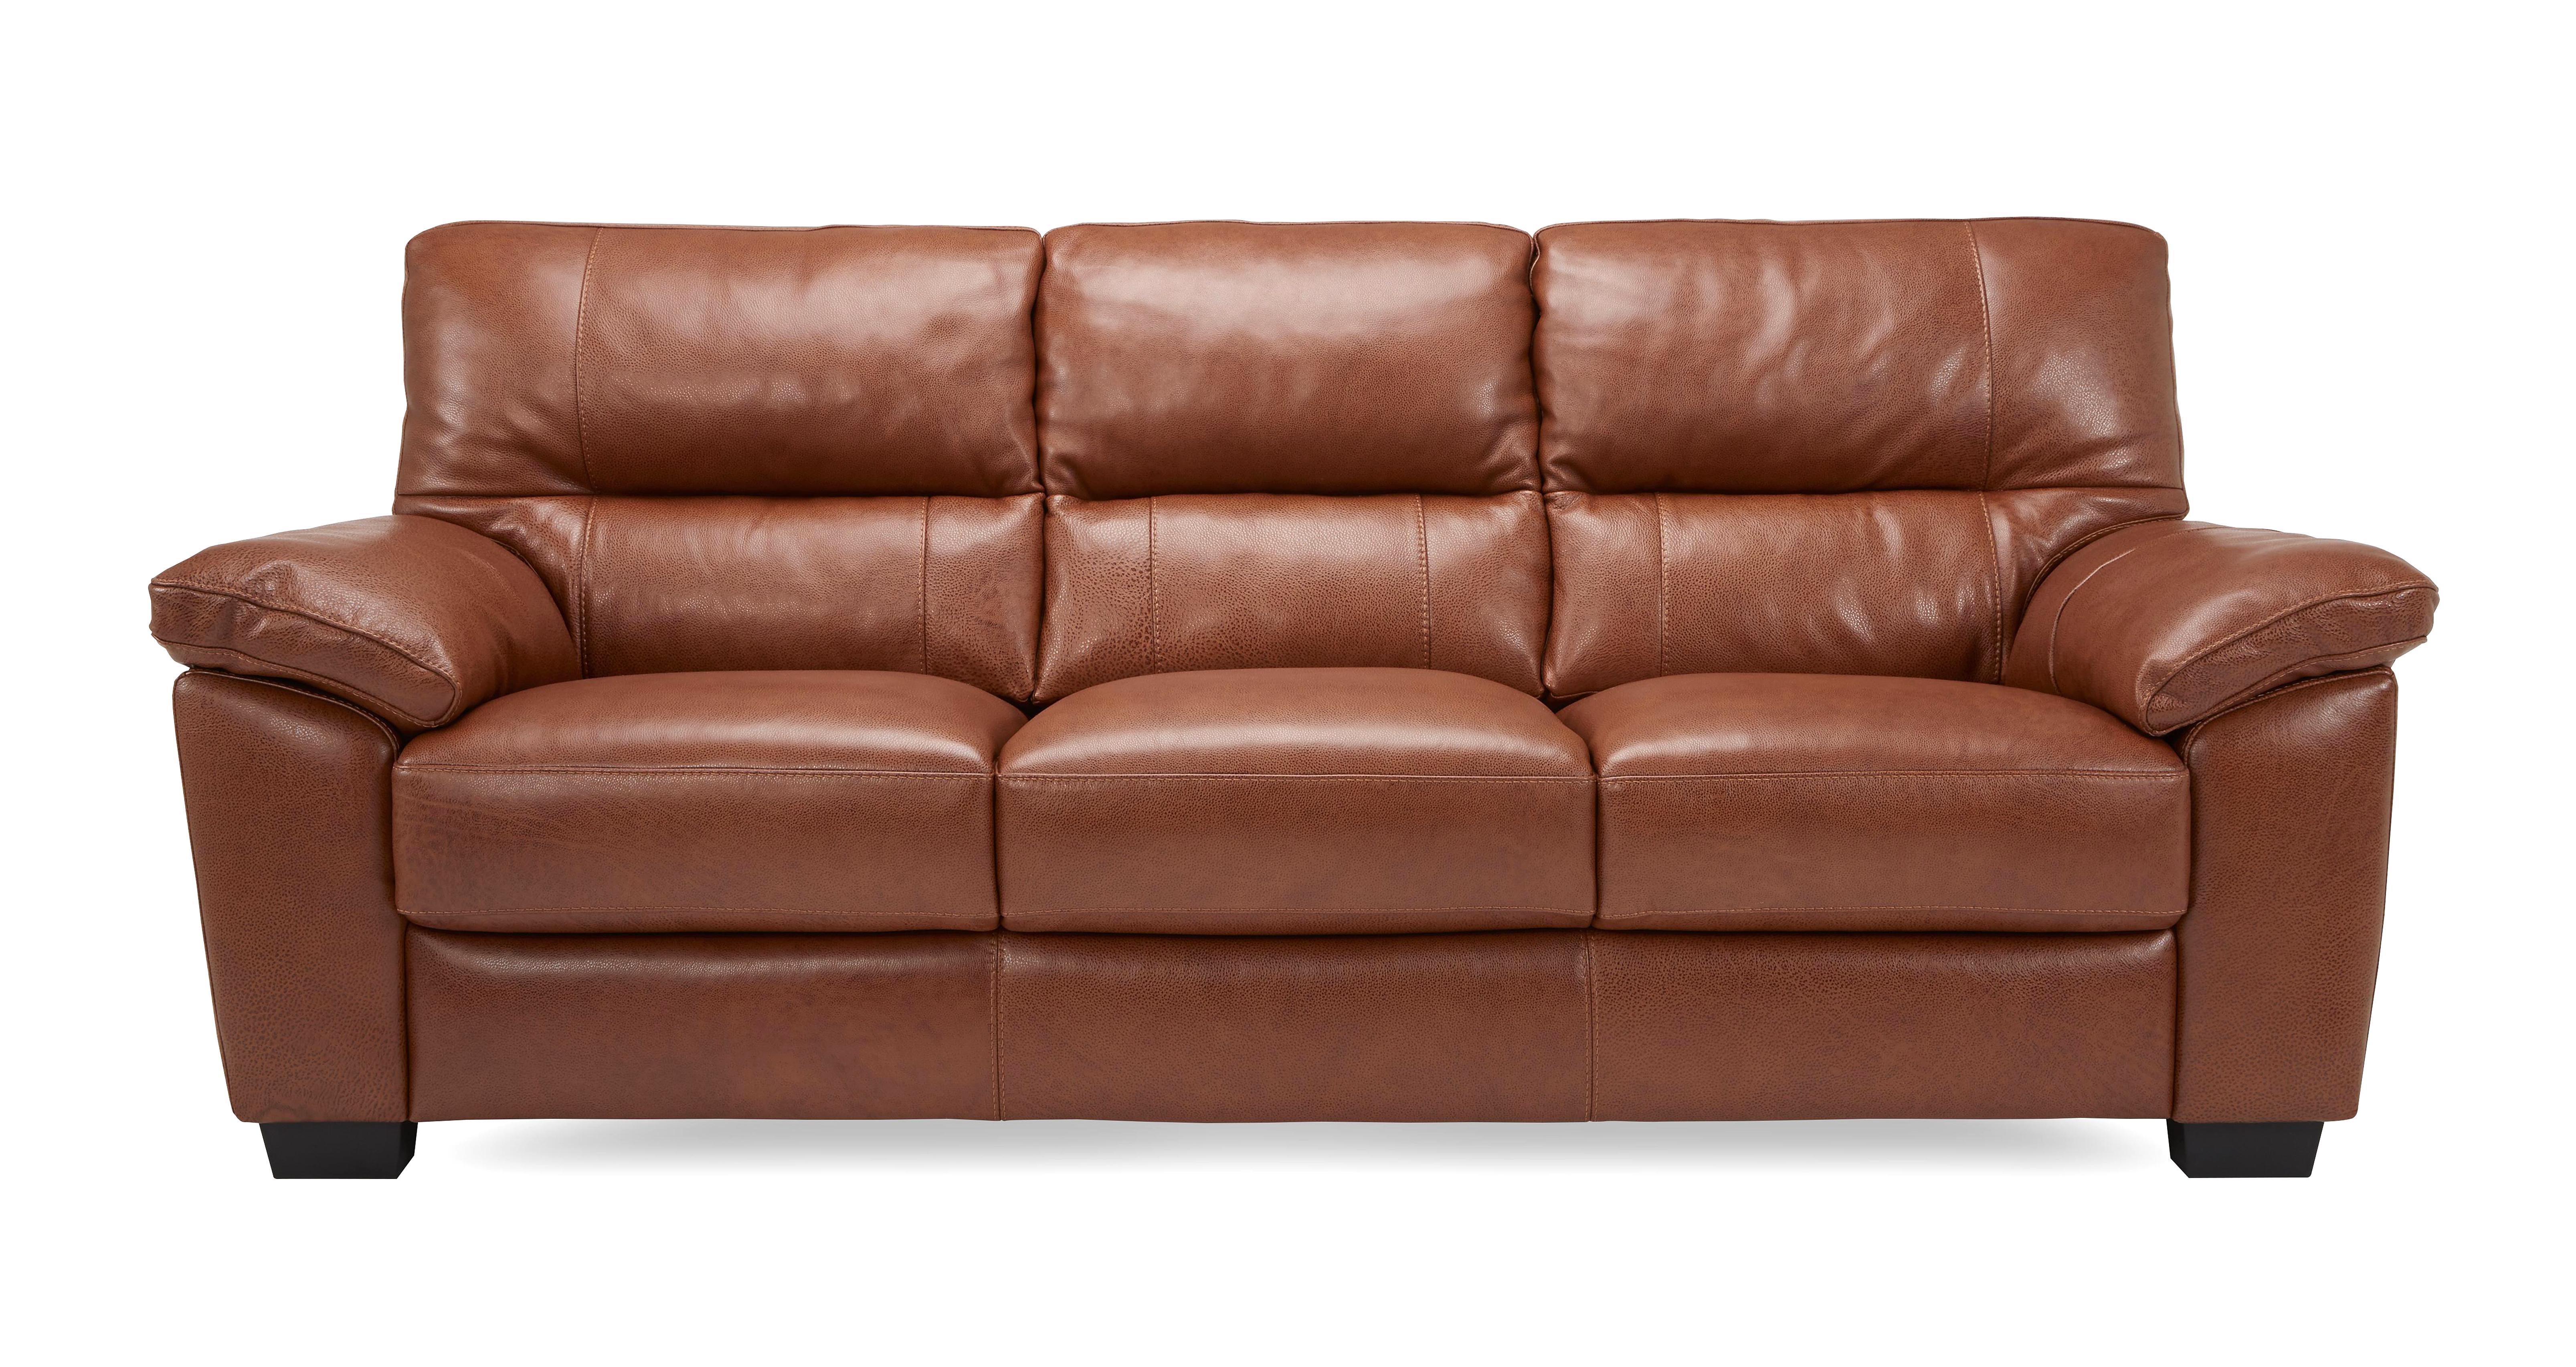 leather j sofa for sale rvs